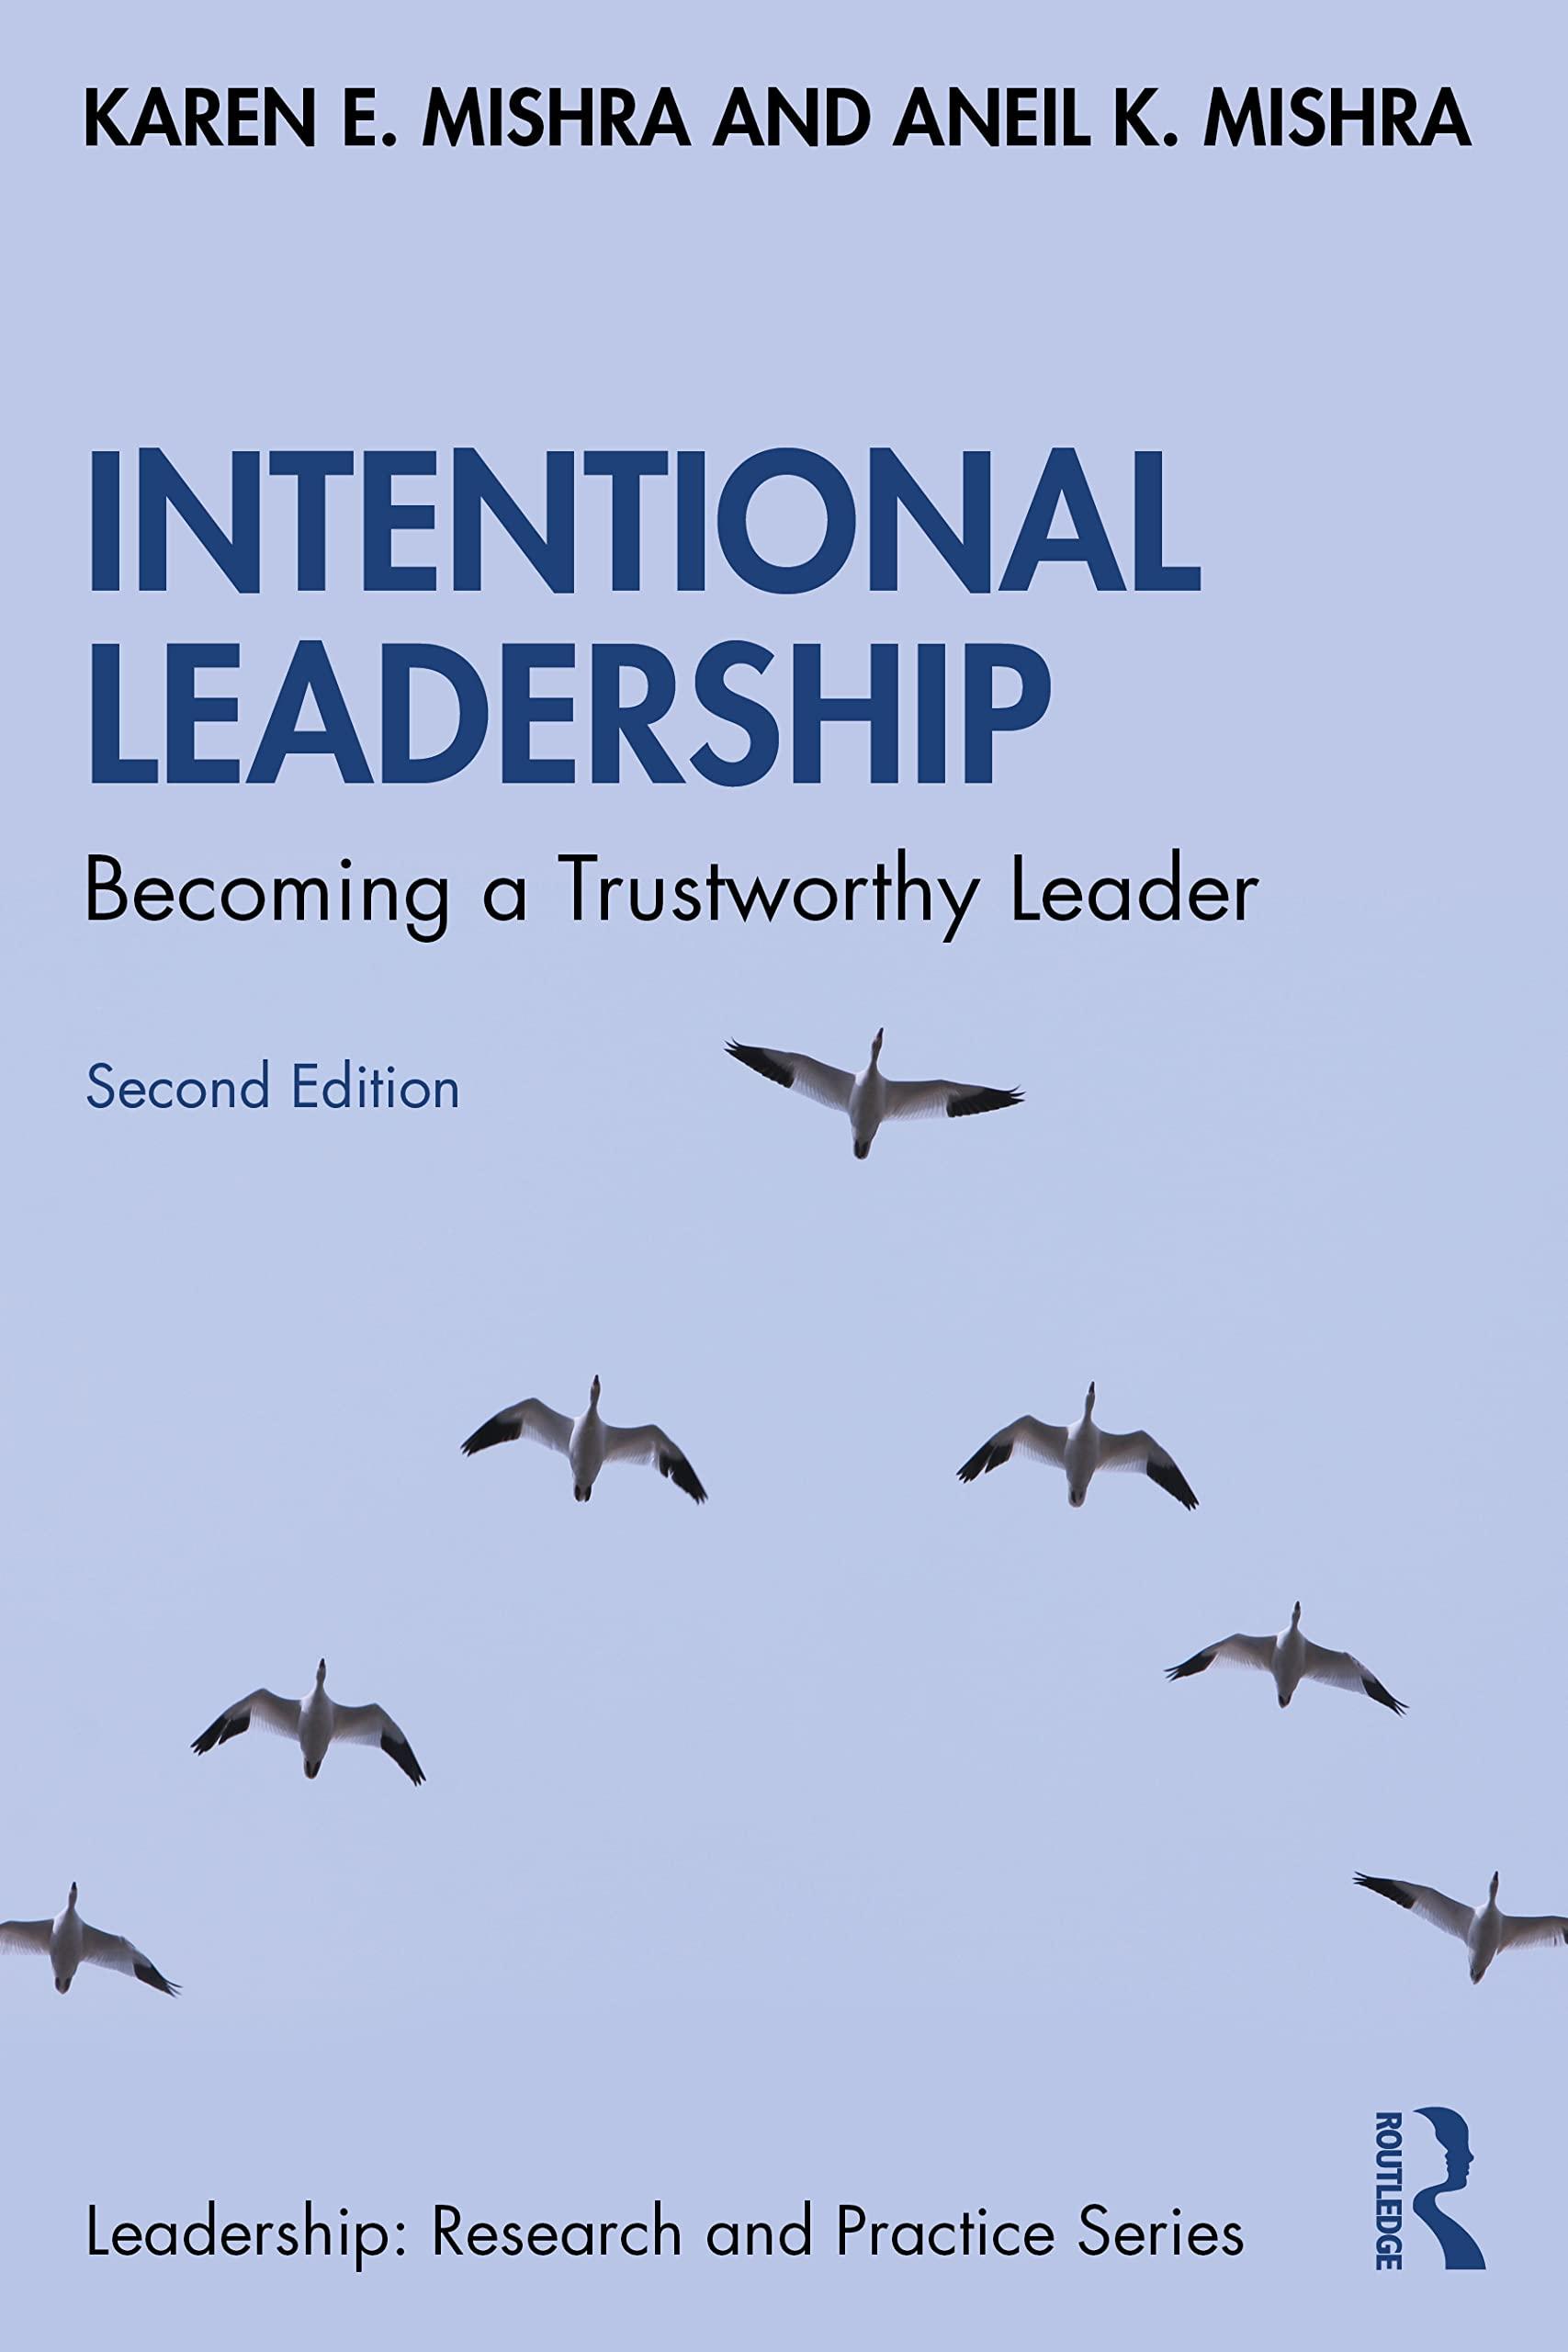 intentional leadership becoming a trustworthy leader 2nd edition karen e. mishra, aneil k. mishra 0367421453,